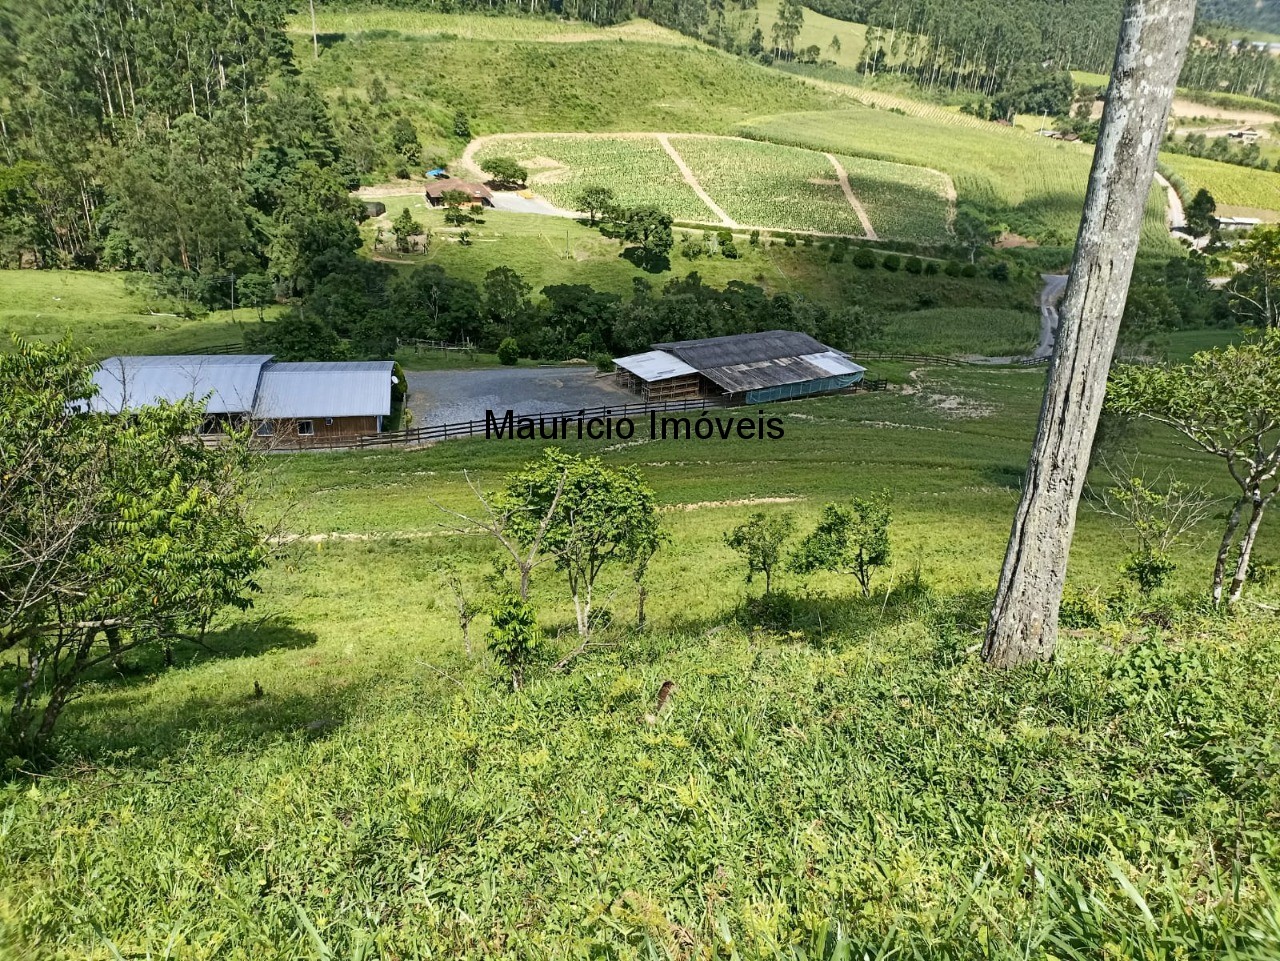 Fazenda-Sítio-Chácara, 6 hectares - Foto 1